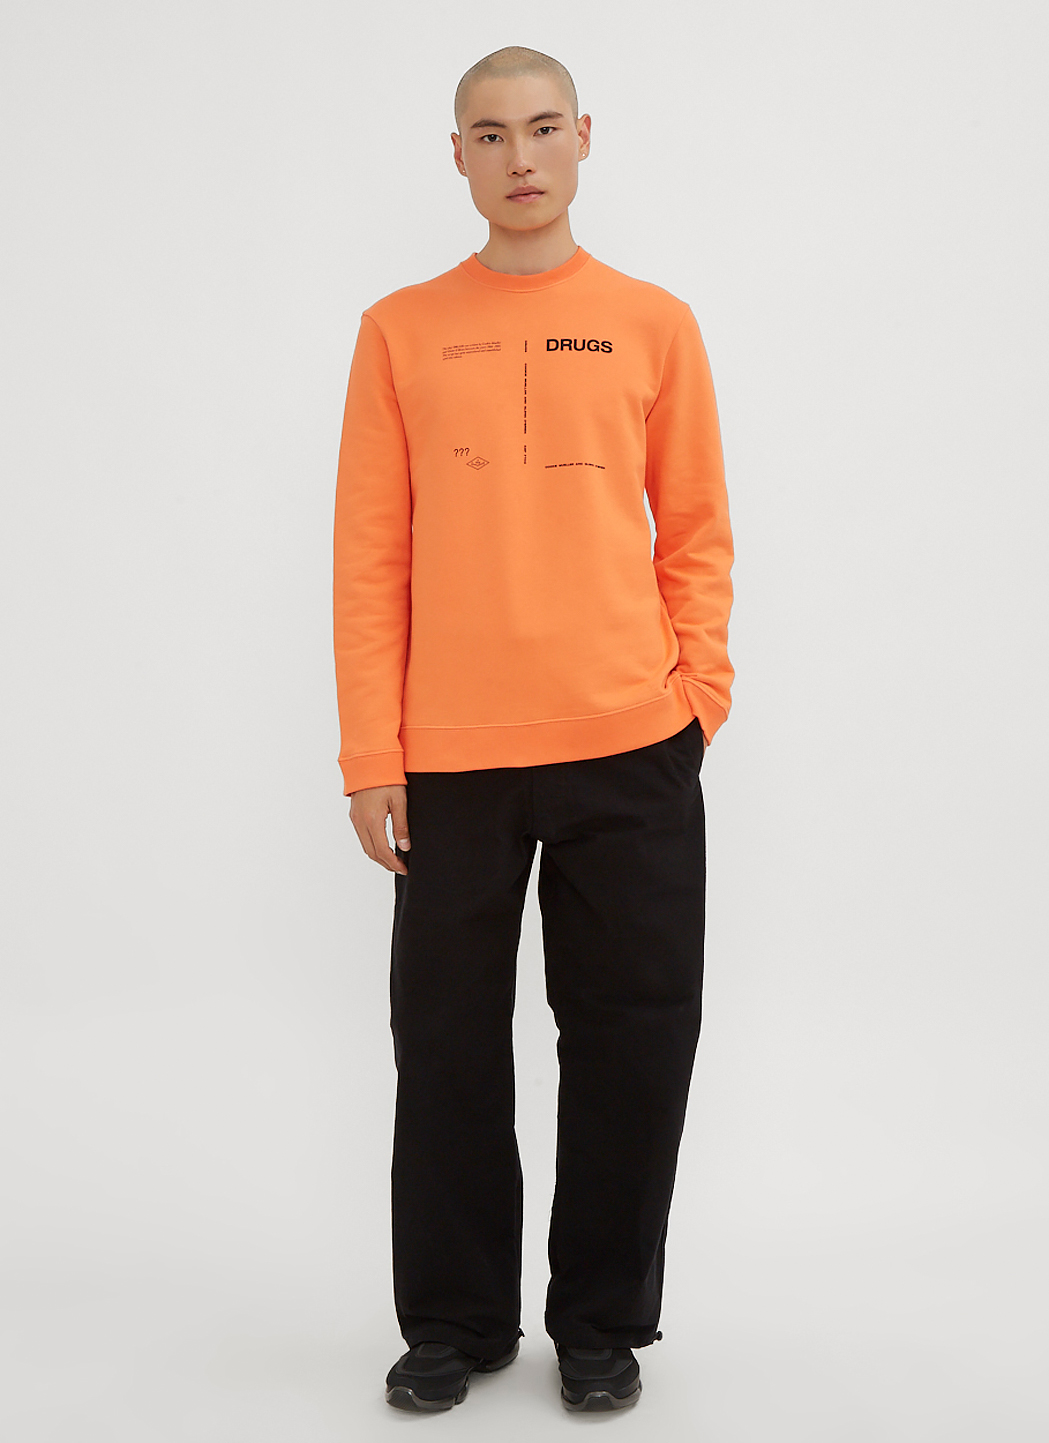 Raf Simons Drugs Crew Neck Sweatshirt in Orange | LN-CC